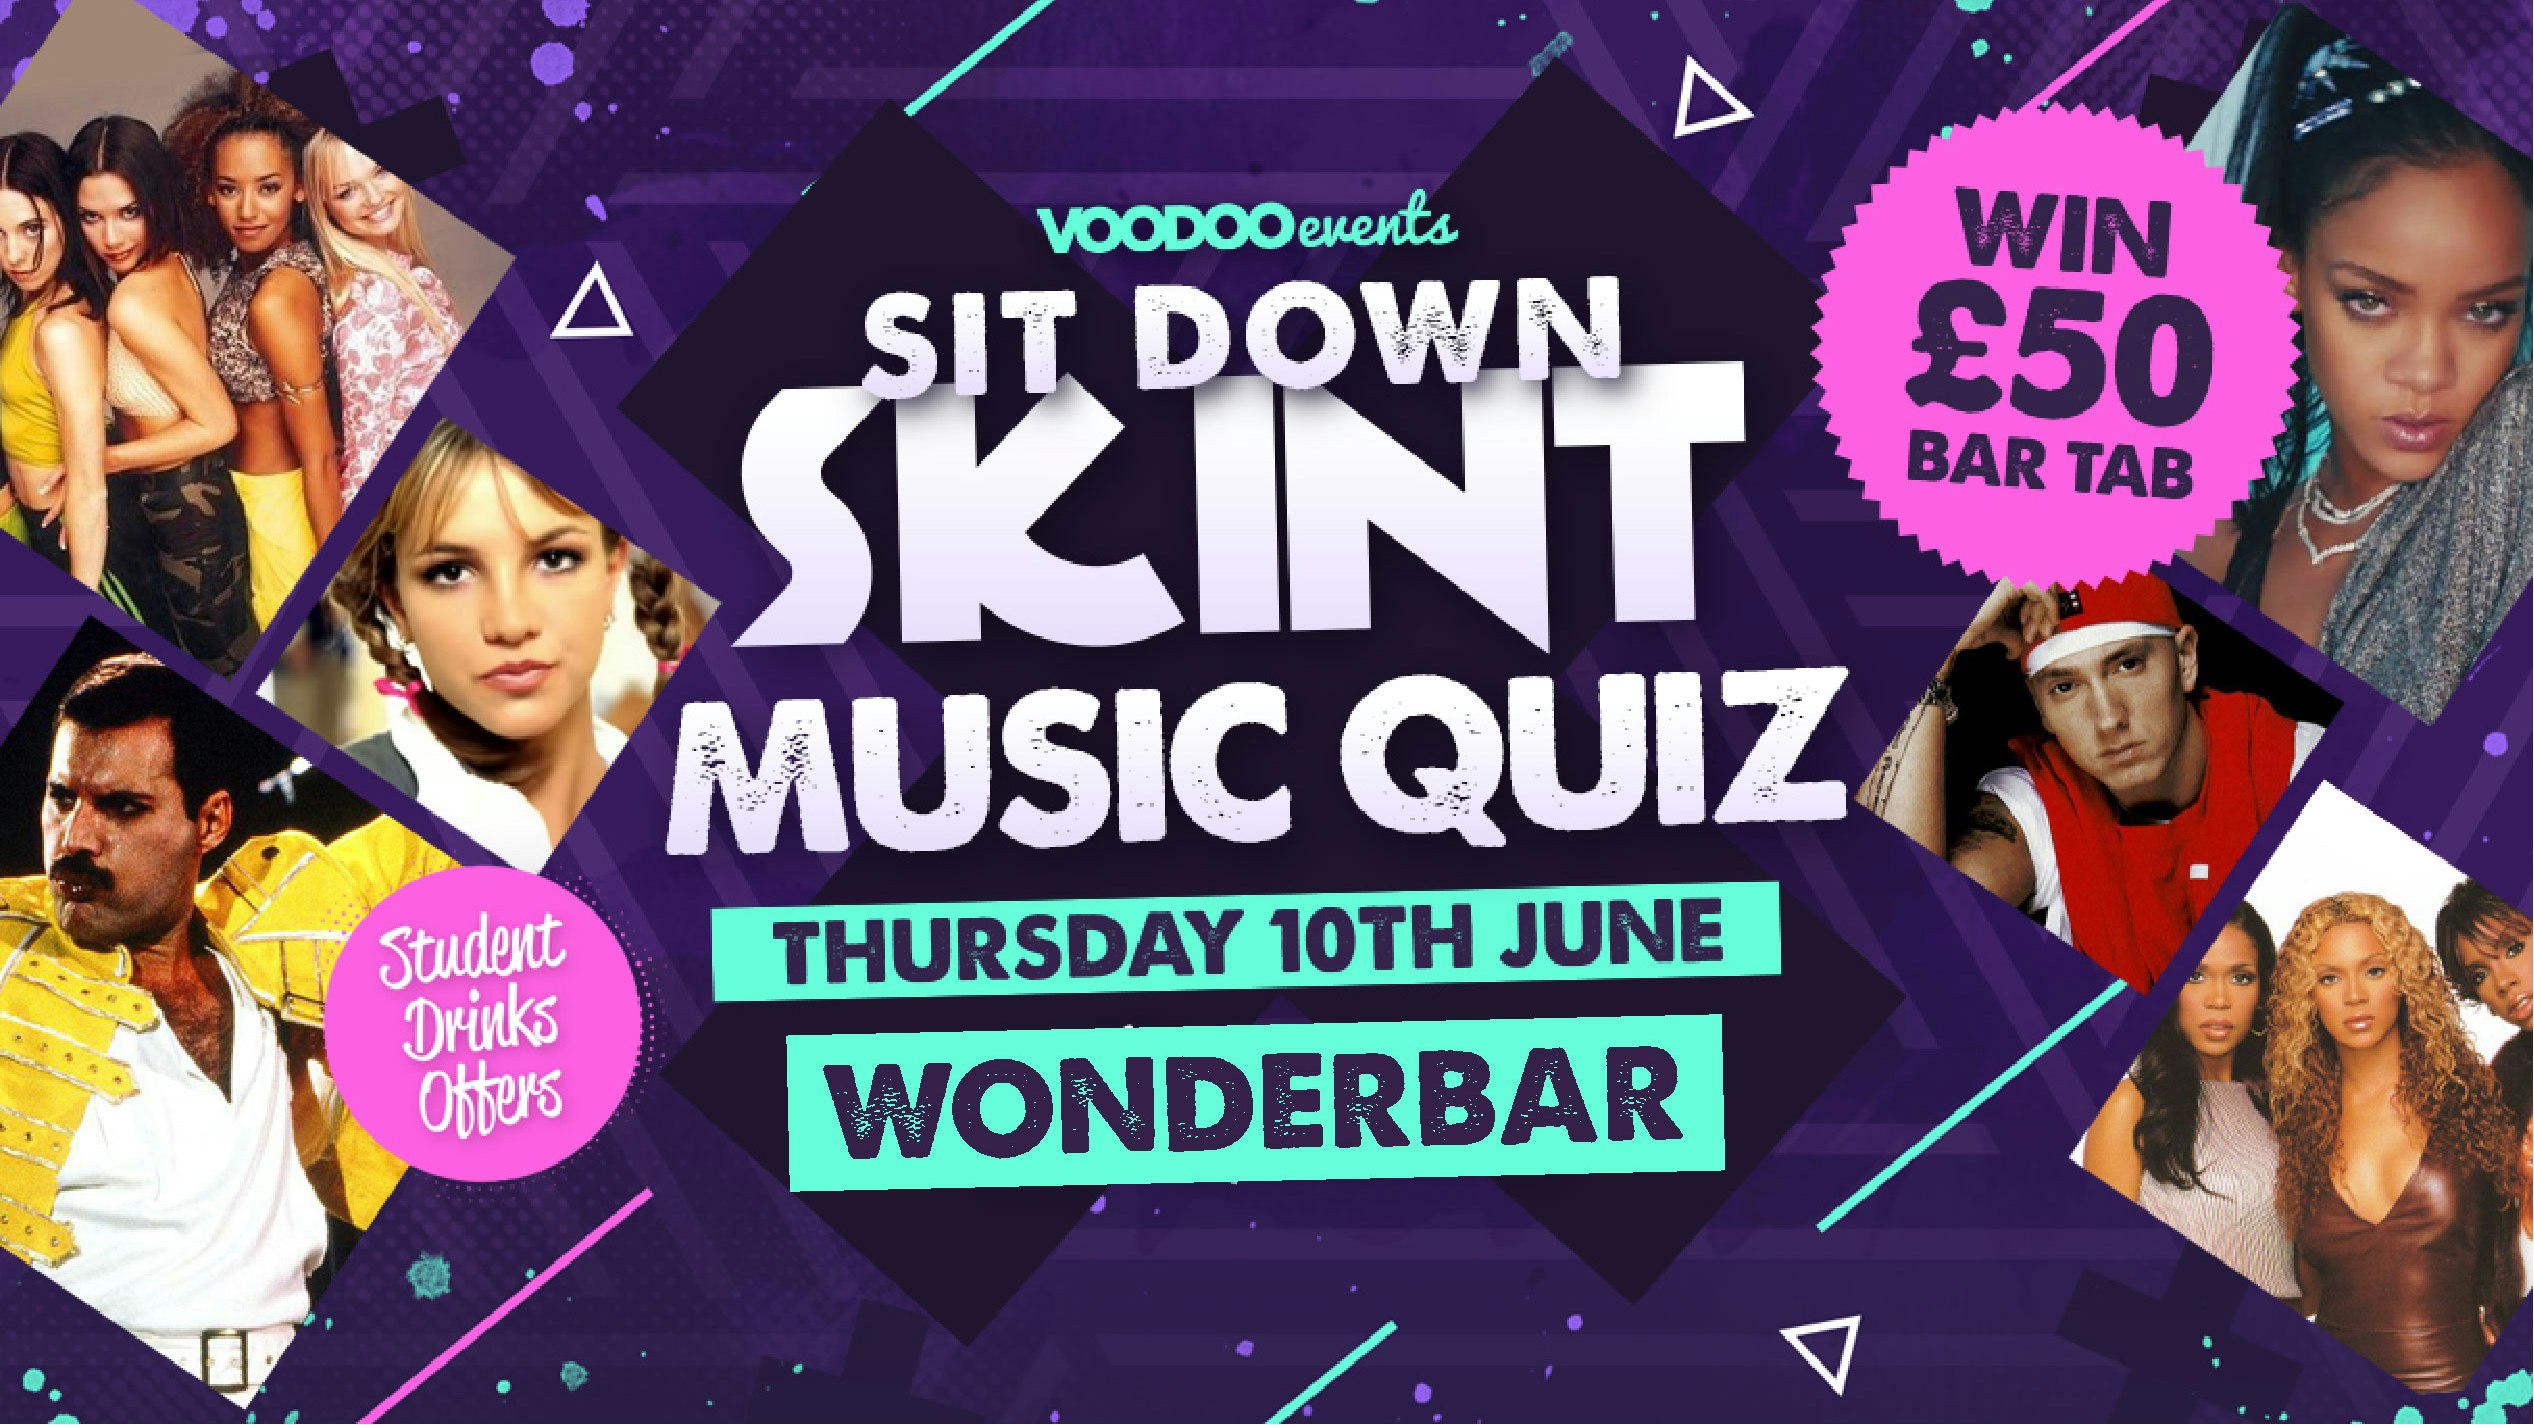 Sit Down Skint – Music Quiz!! – NOW AT WONDERBAR!!